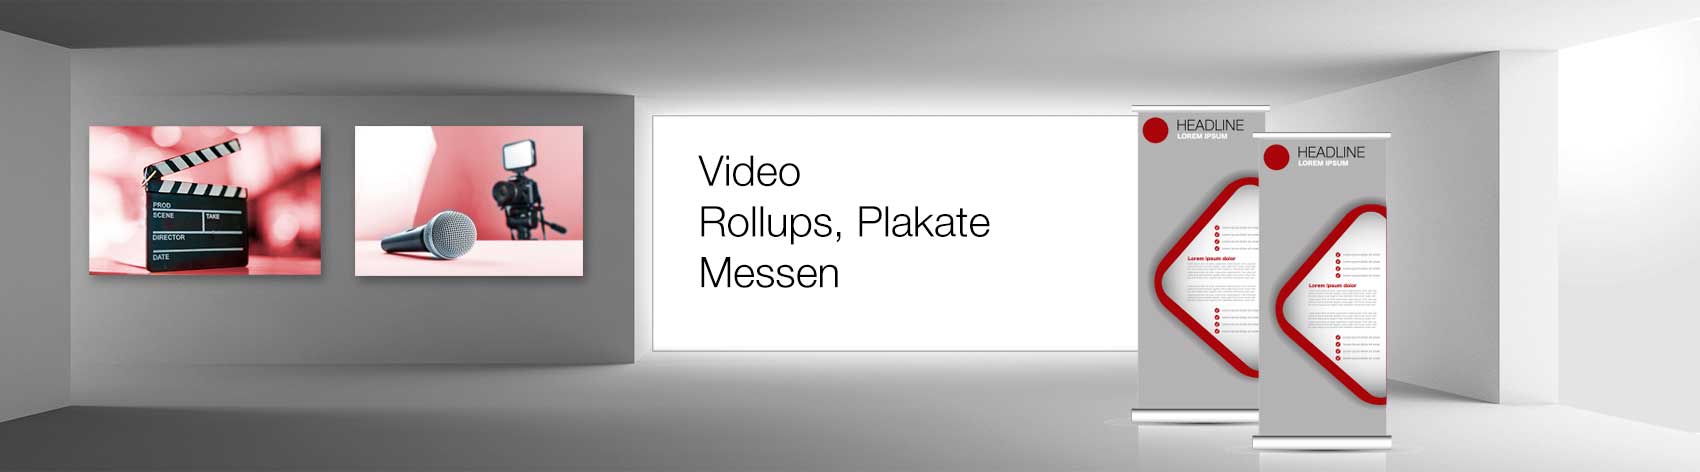 Video, Messe, RollUps